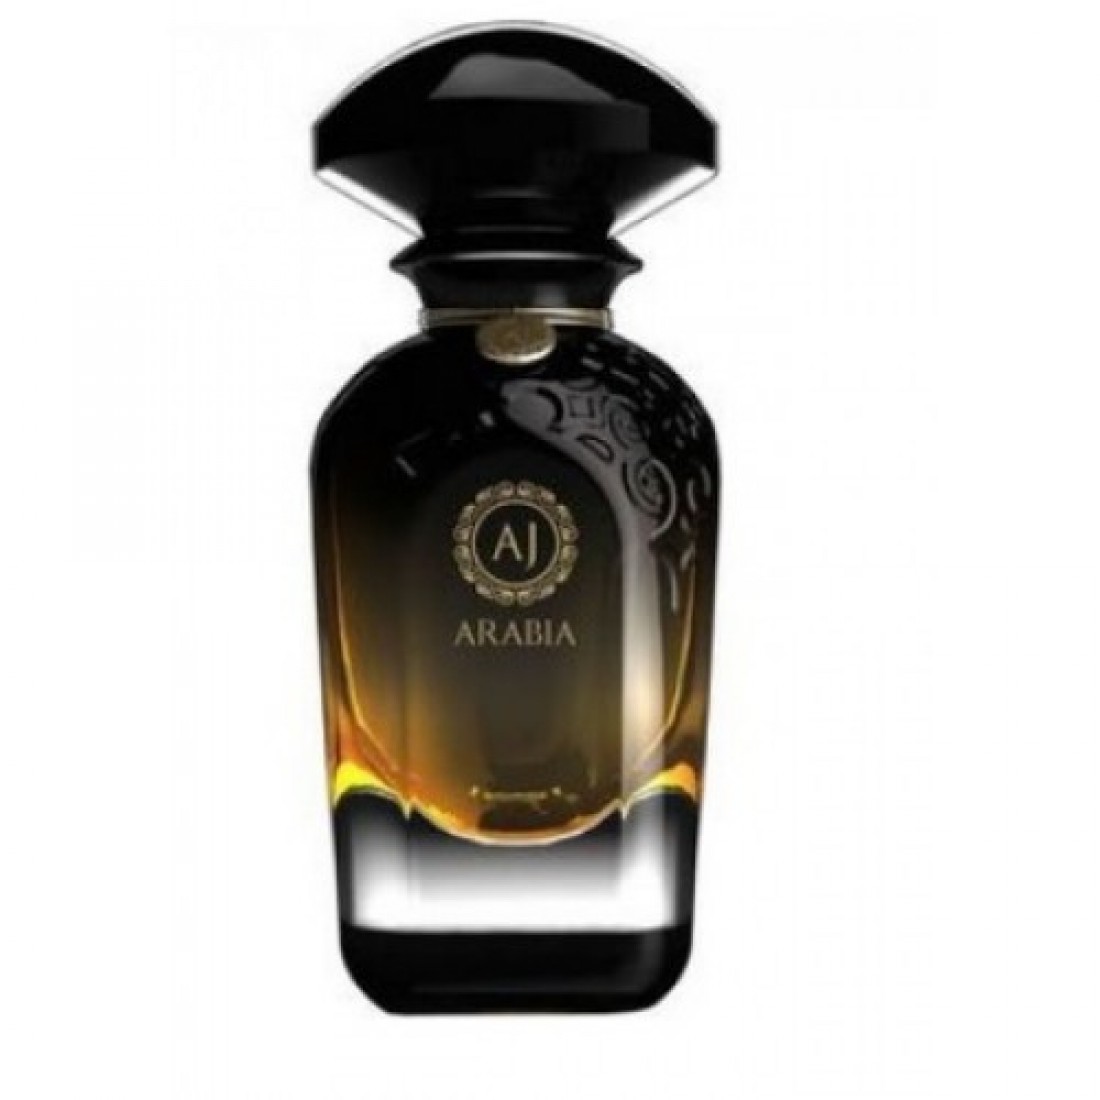 Arabia 2. AJ Arabia Widian Black 1 духи (тестер) 50 мл. Widian AJ Arabia - Black collection i. Духи Widian AJ Arabia 2. AJ Arabia Widian Black 2 Parfum.